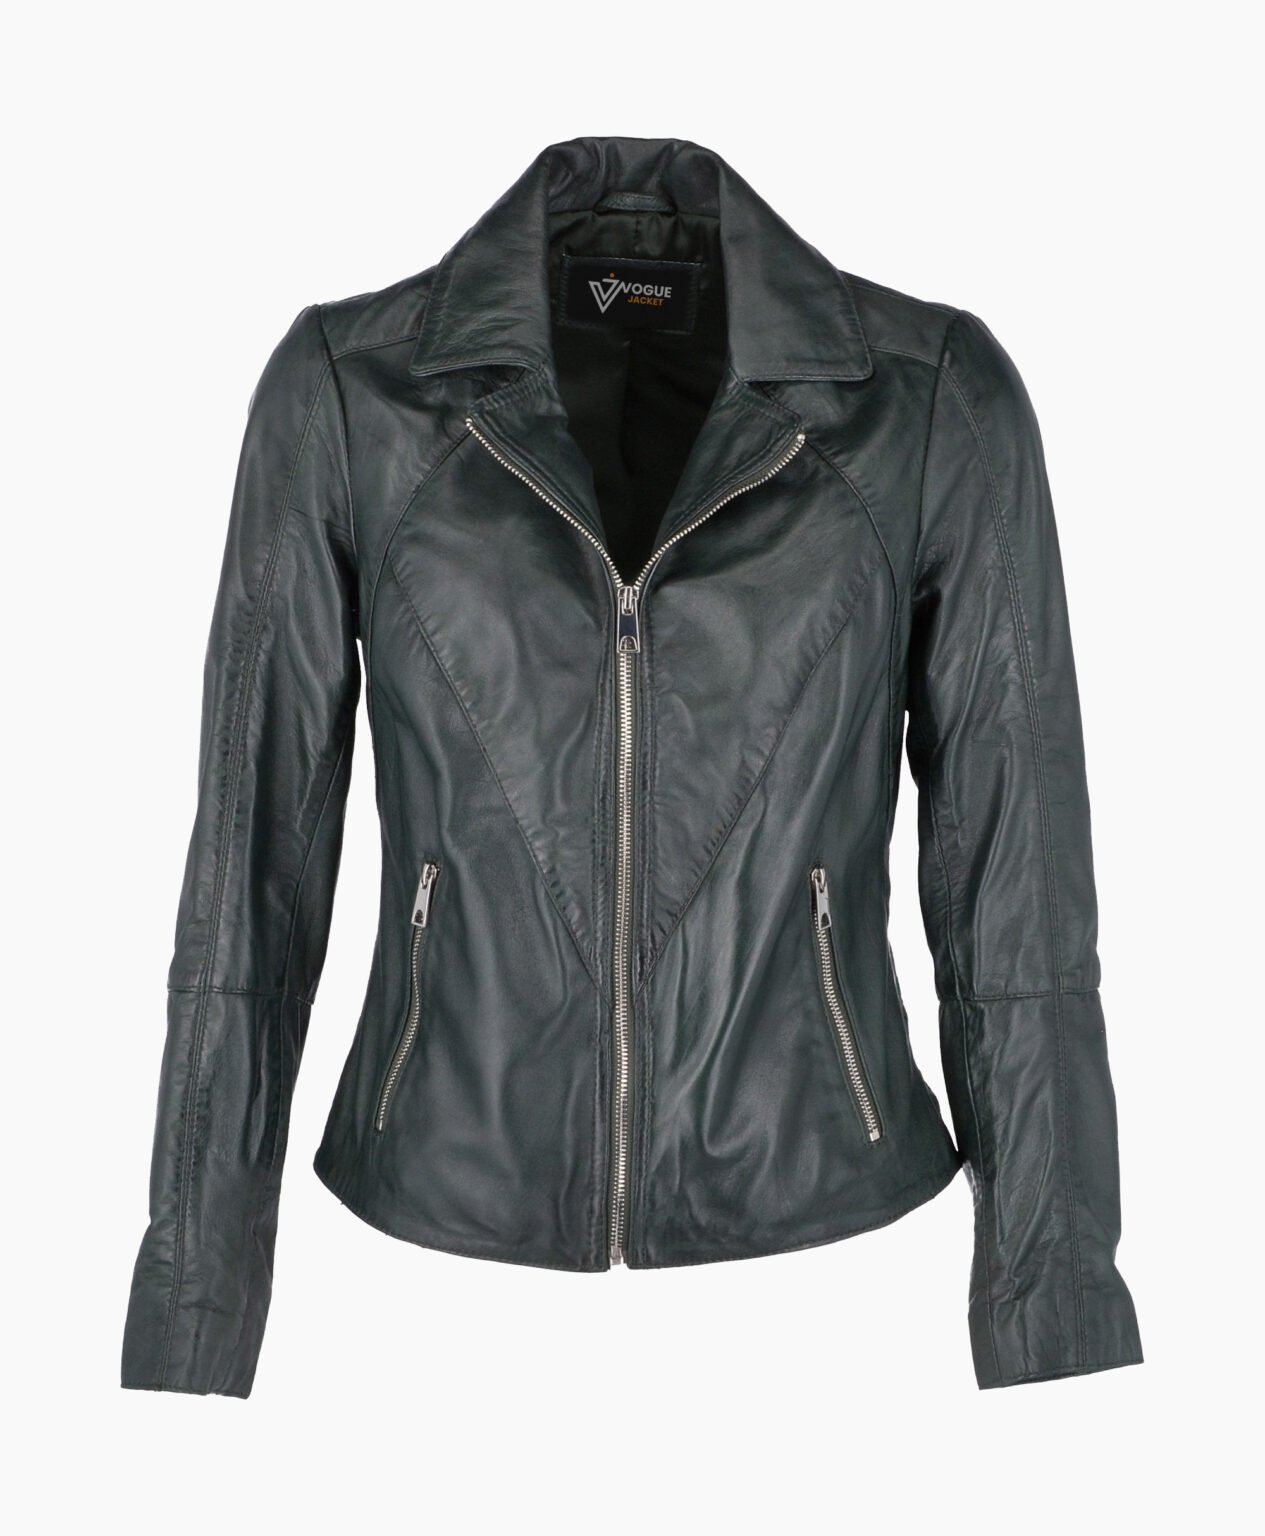 vogue-jacket-leather-biker-jacket-green-el-dorado-image200